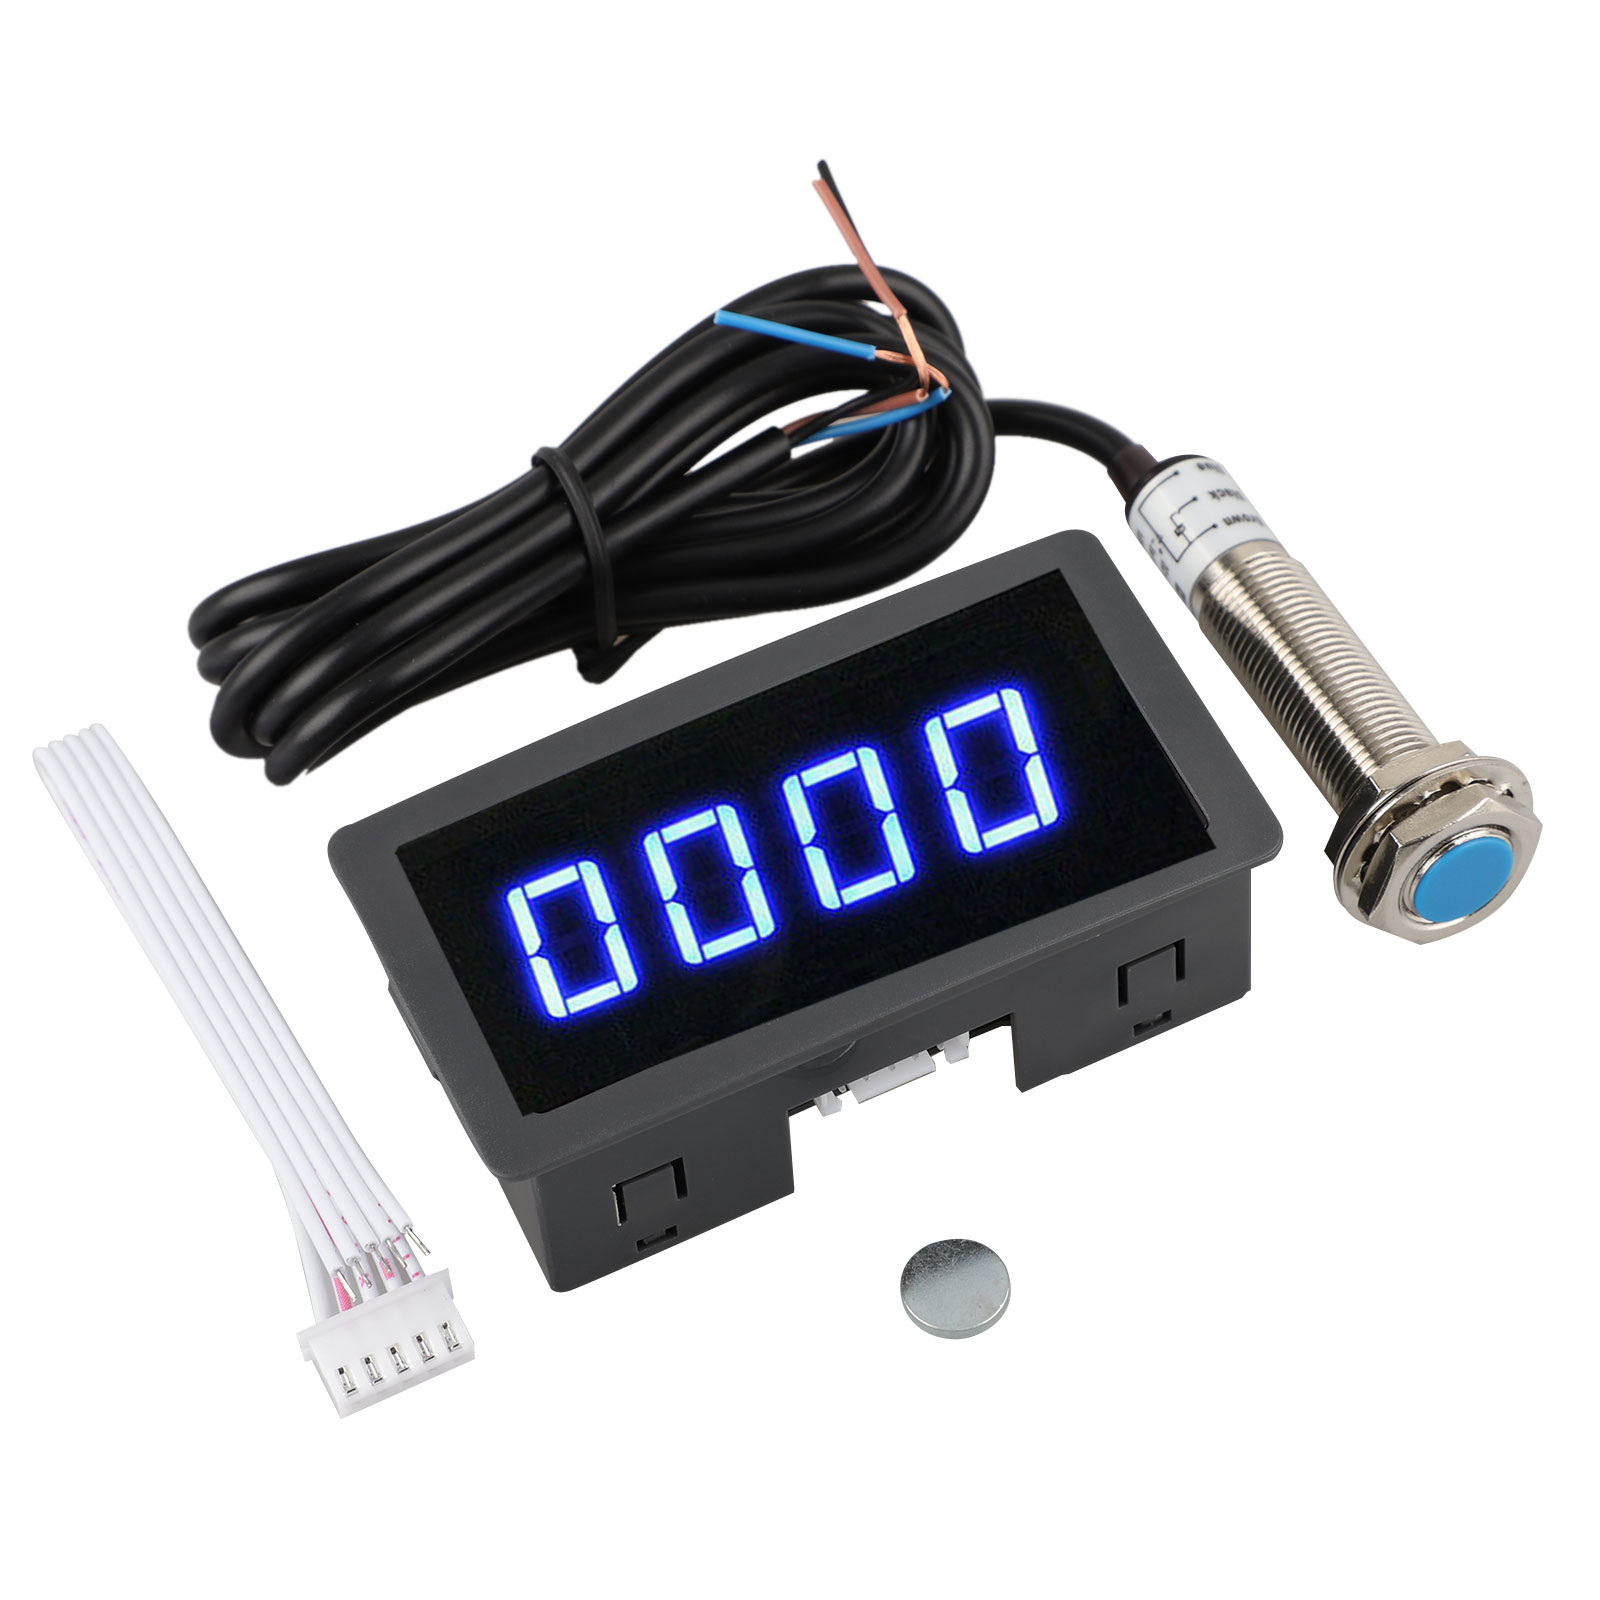 Digital RPM Meter,Motor Speed Meter LED Tachometer RPM Speed Meter,12V 4-Digit LED Display Tachometer Motor RPM Meter+Hall Switch Sensor NPN